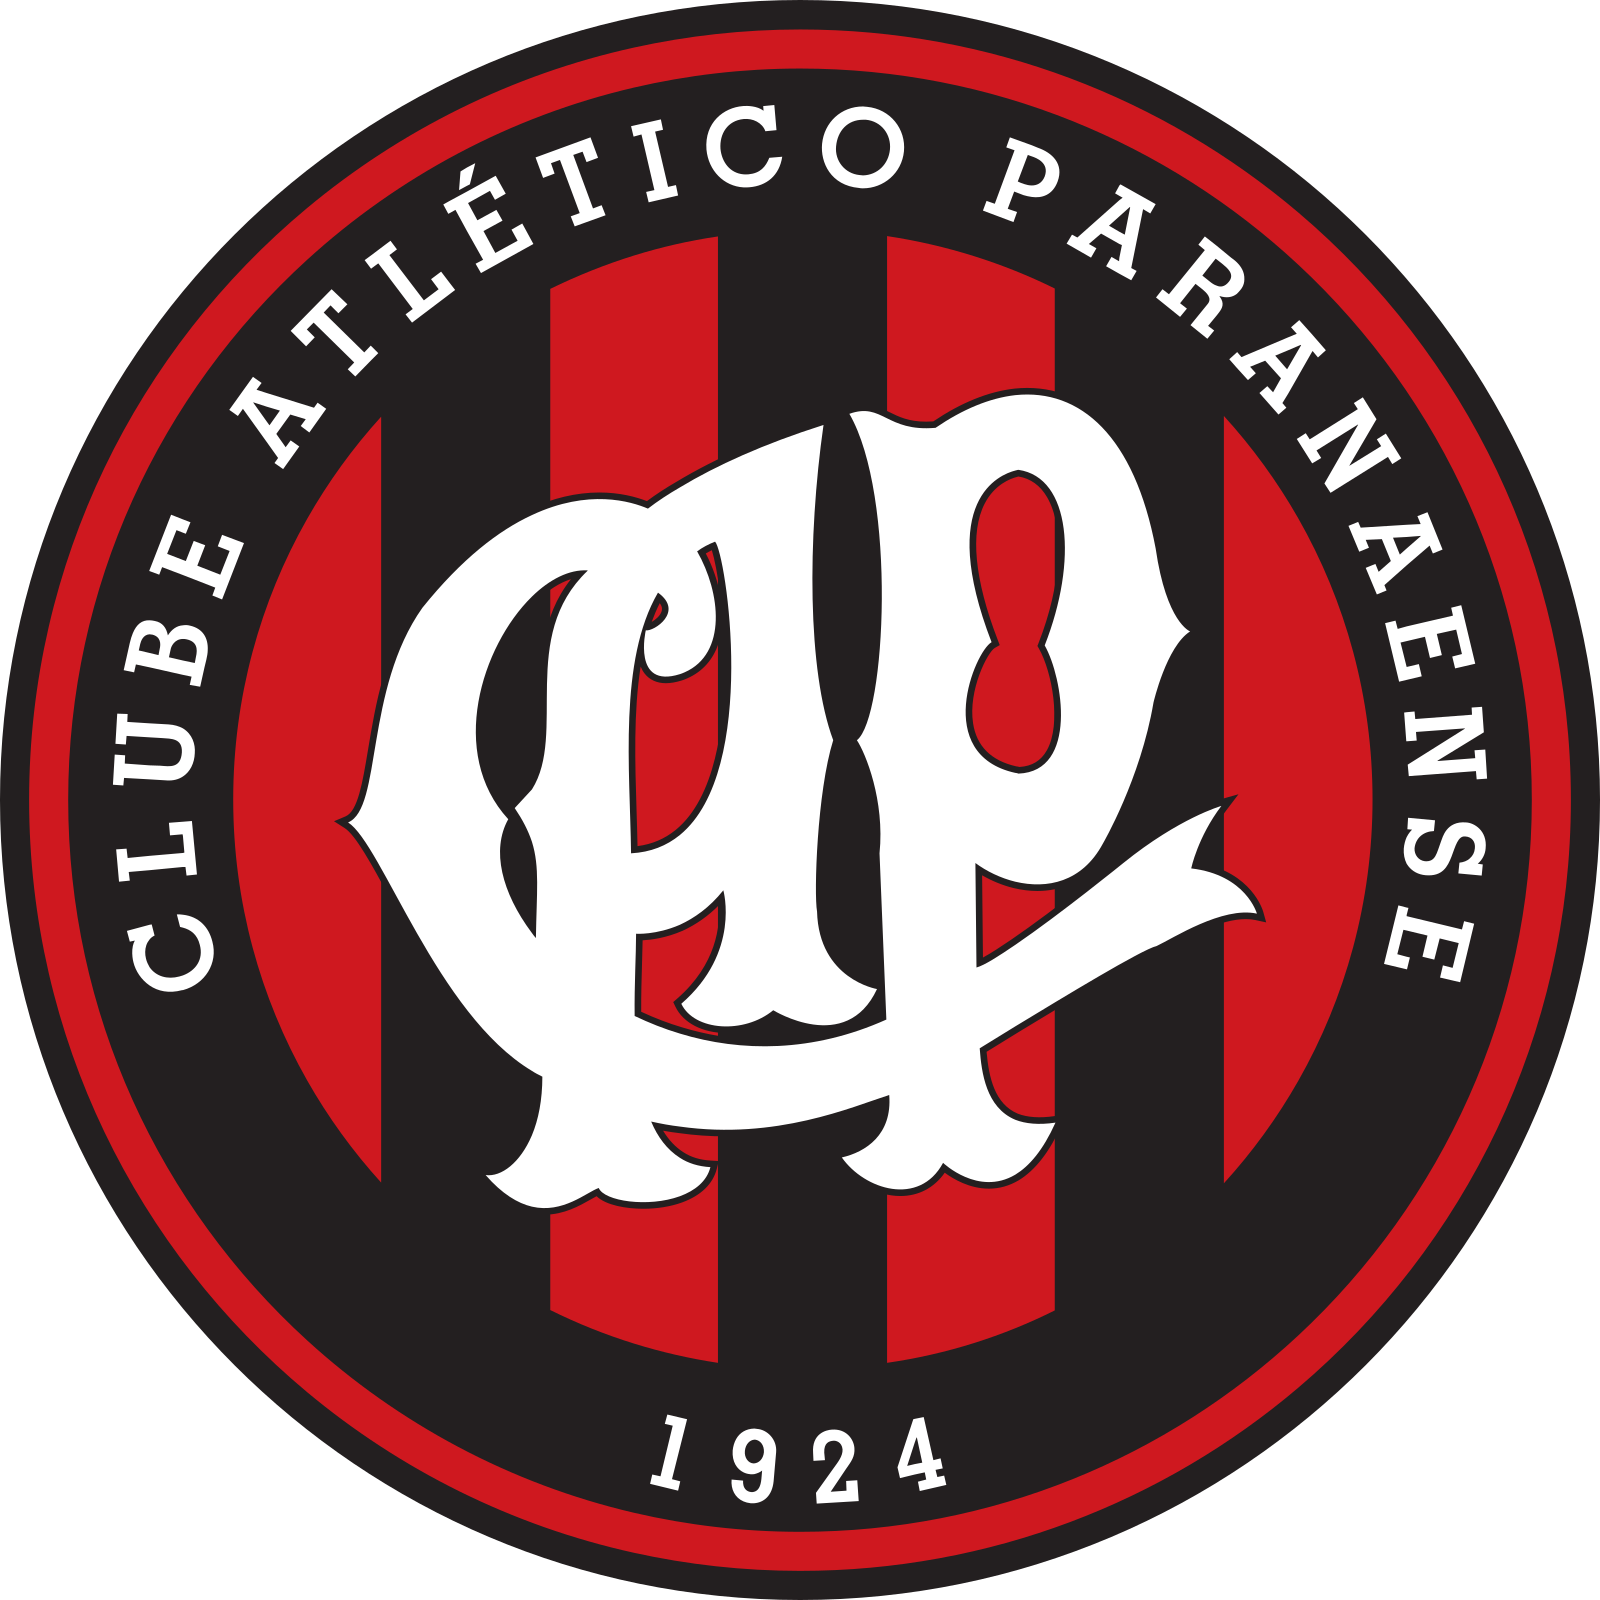 Hino do Atlético Paranaense download mp3.